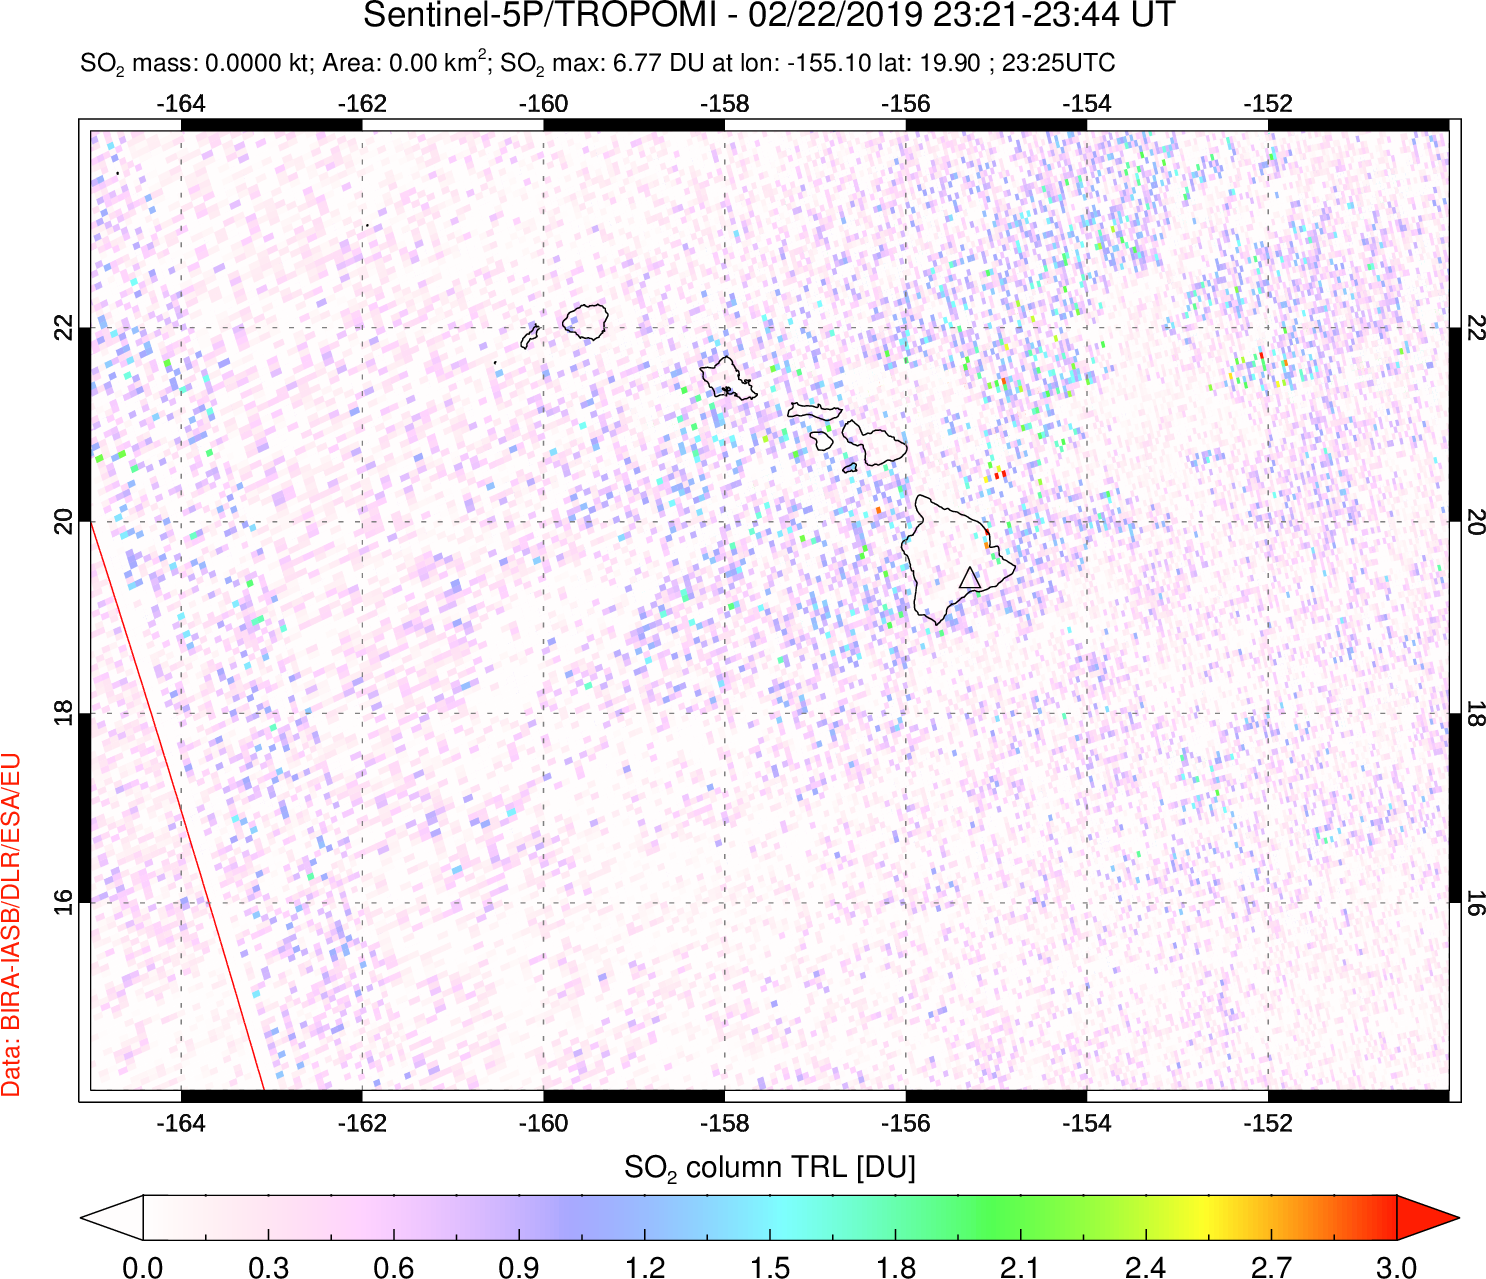 A sulfur dioxide image over Hawaii, USA on Feb 22, 2019.